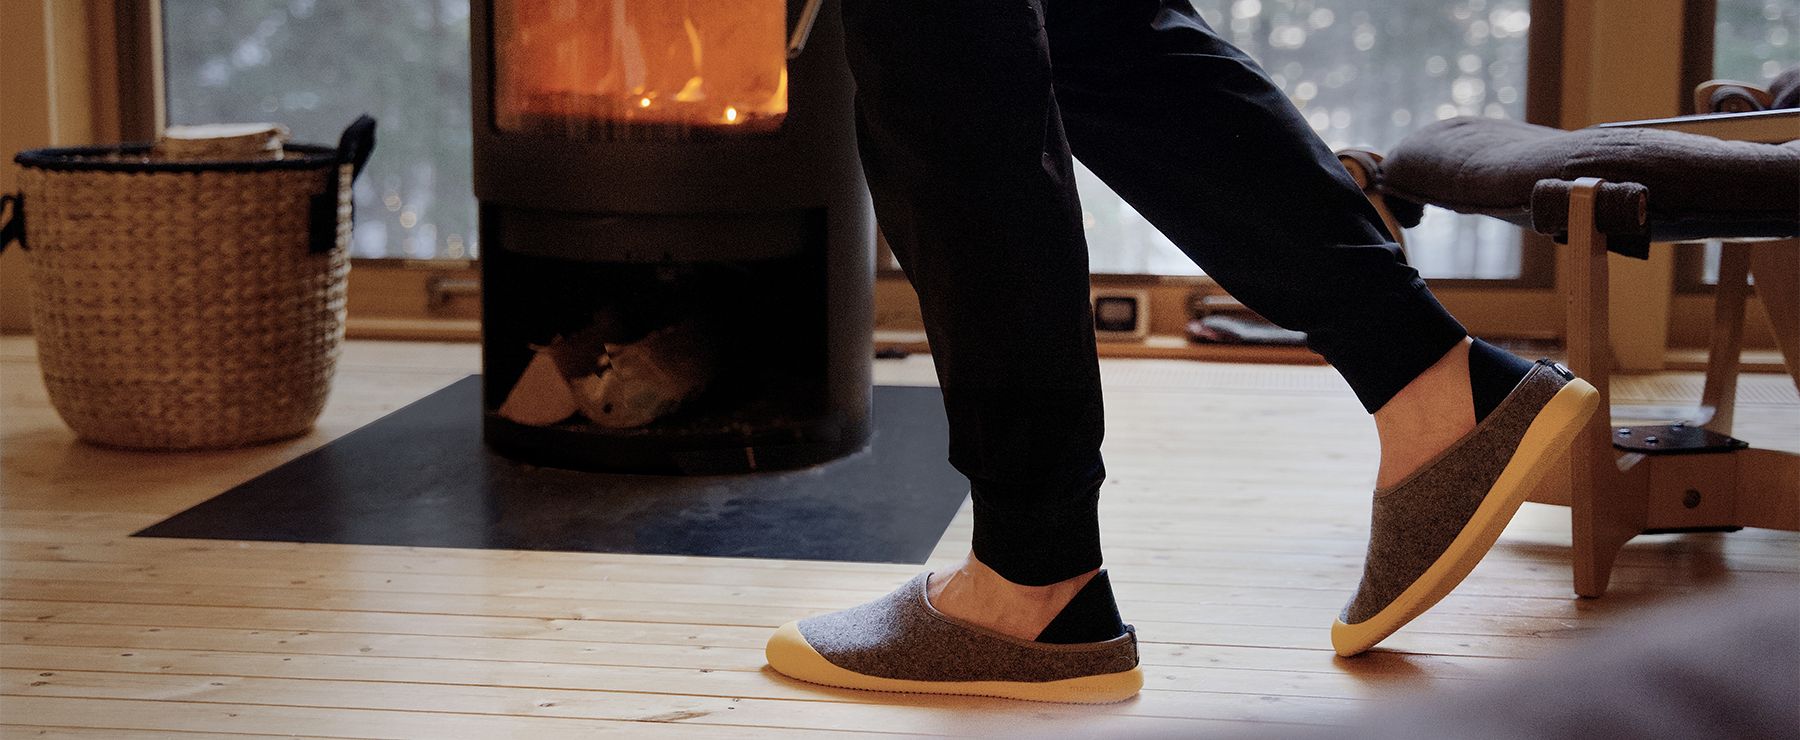 man walking in slippers in front of fire to warm feet